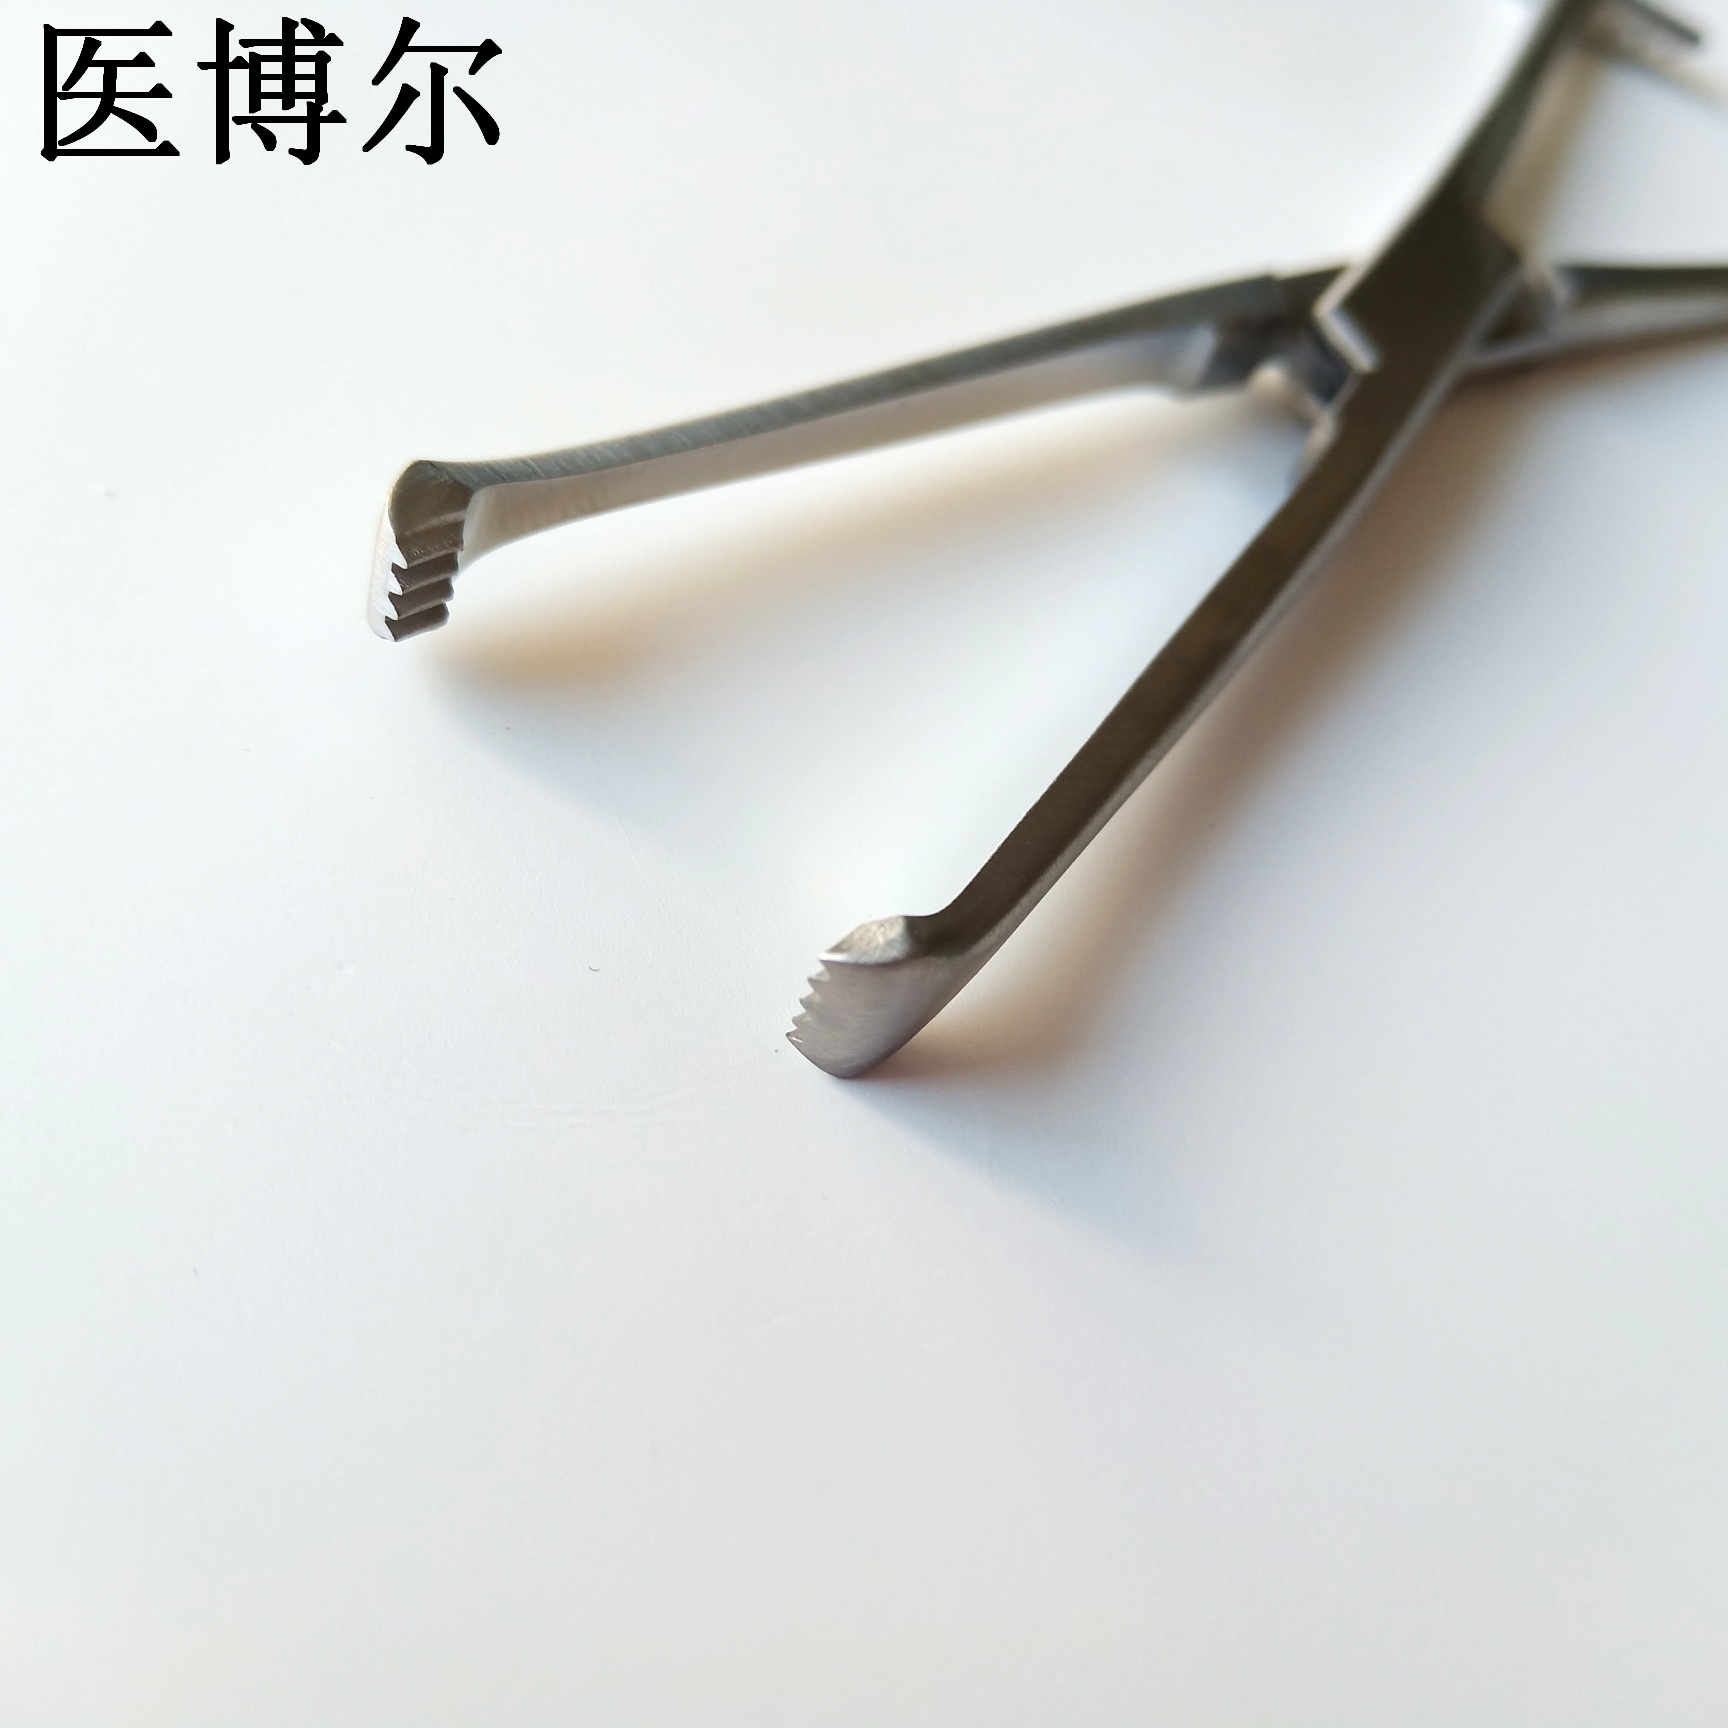 16cm组织钳 (5)_看图王.jpg